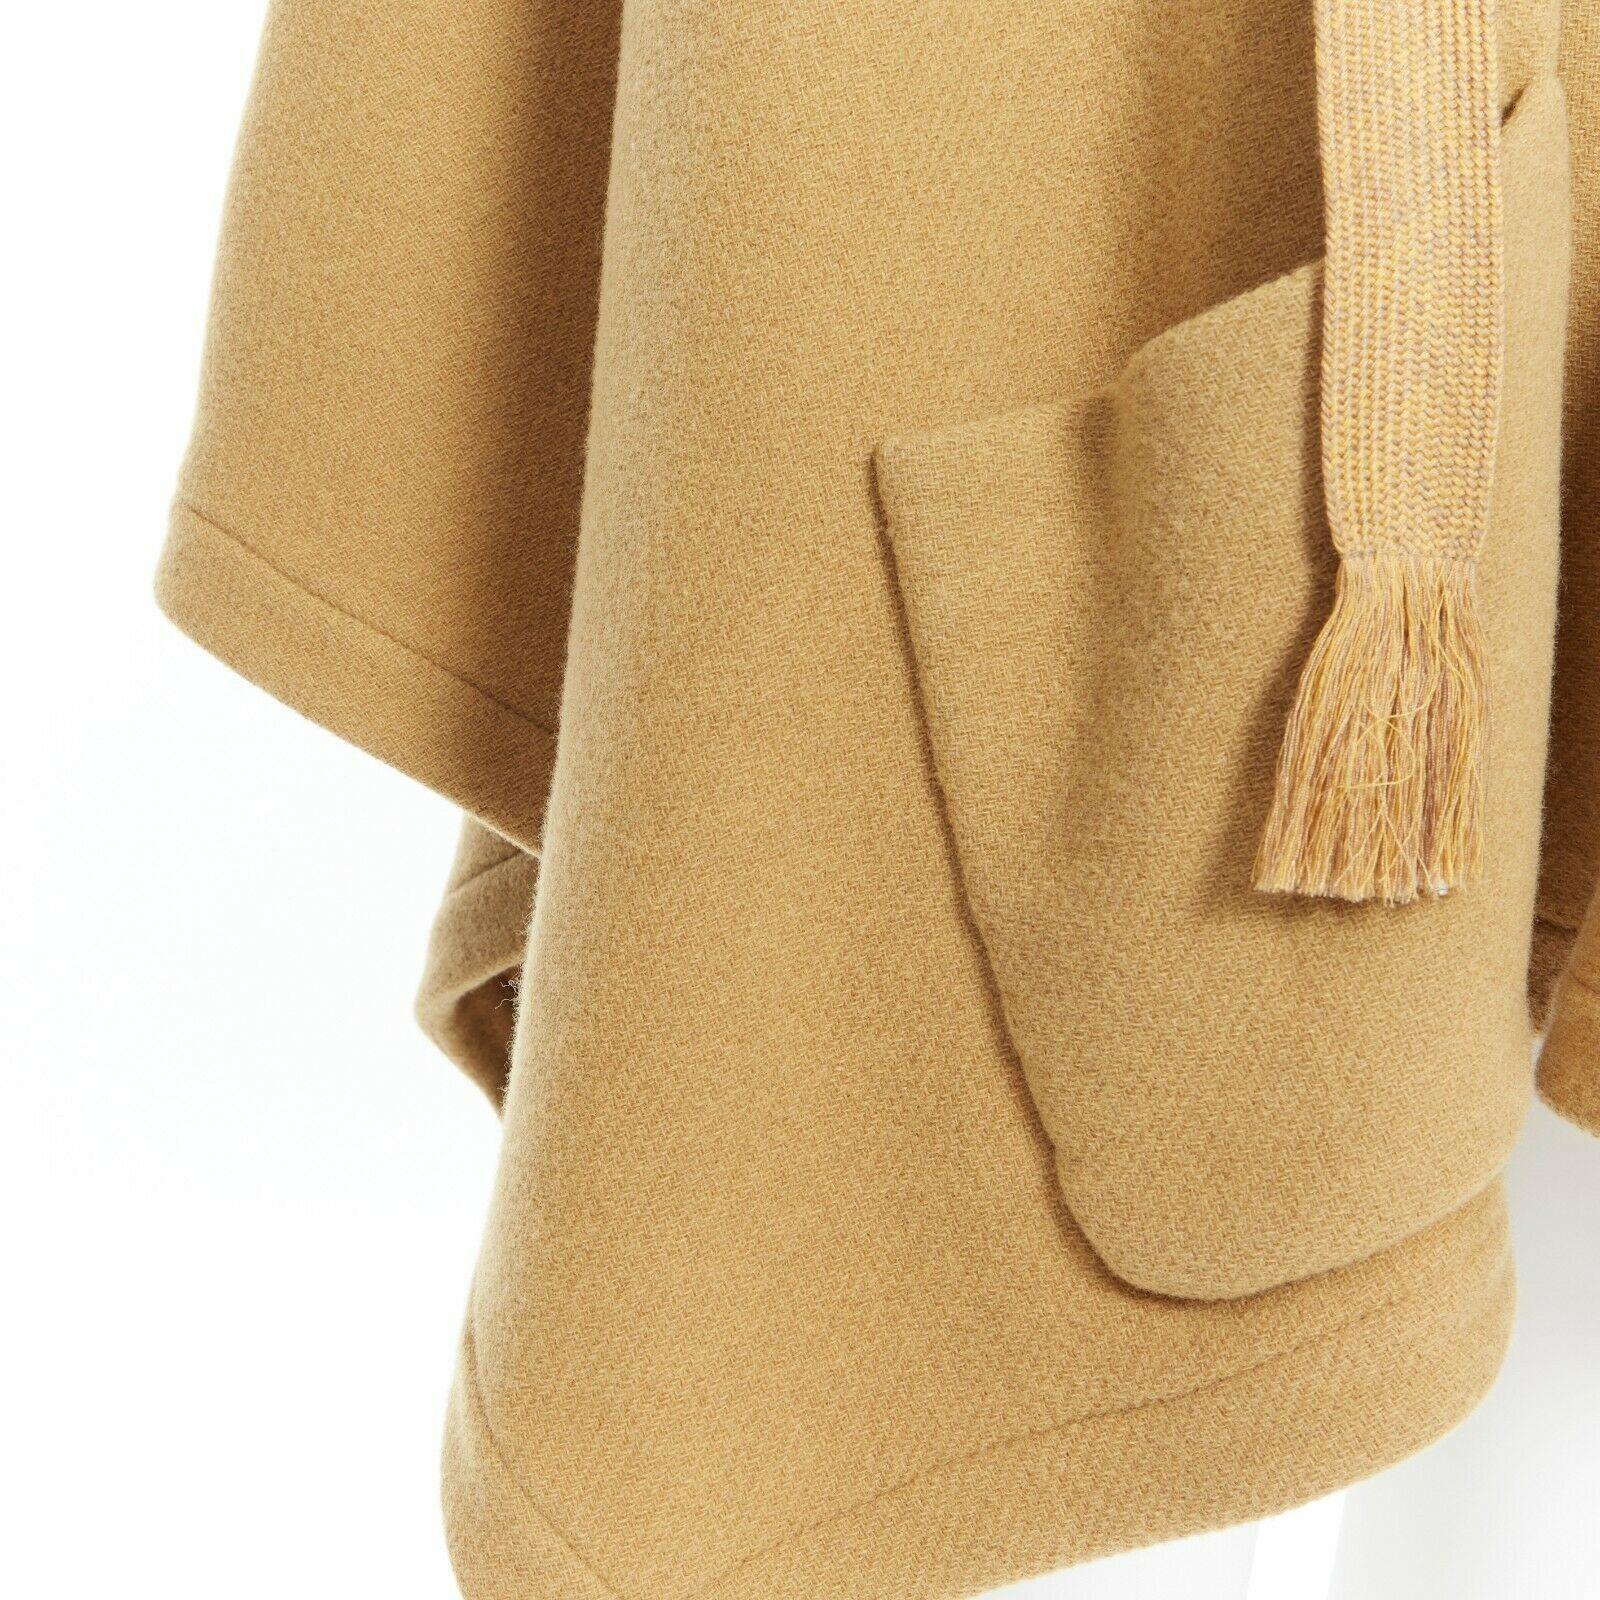 runway CHLOE 2017 virgin wool poncho cape gold khaki brown lace-up FR36 S 1